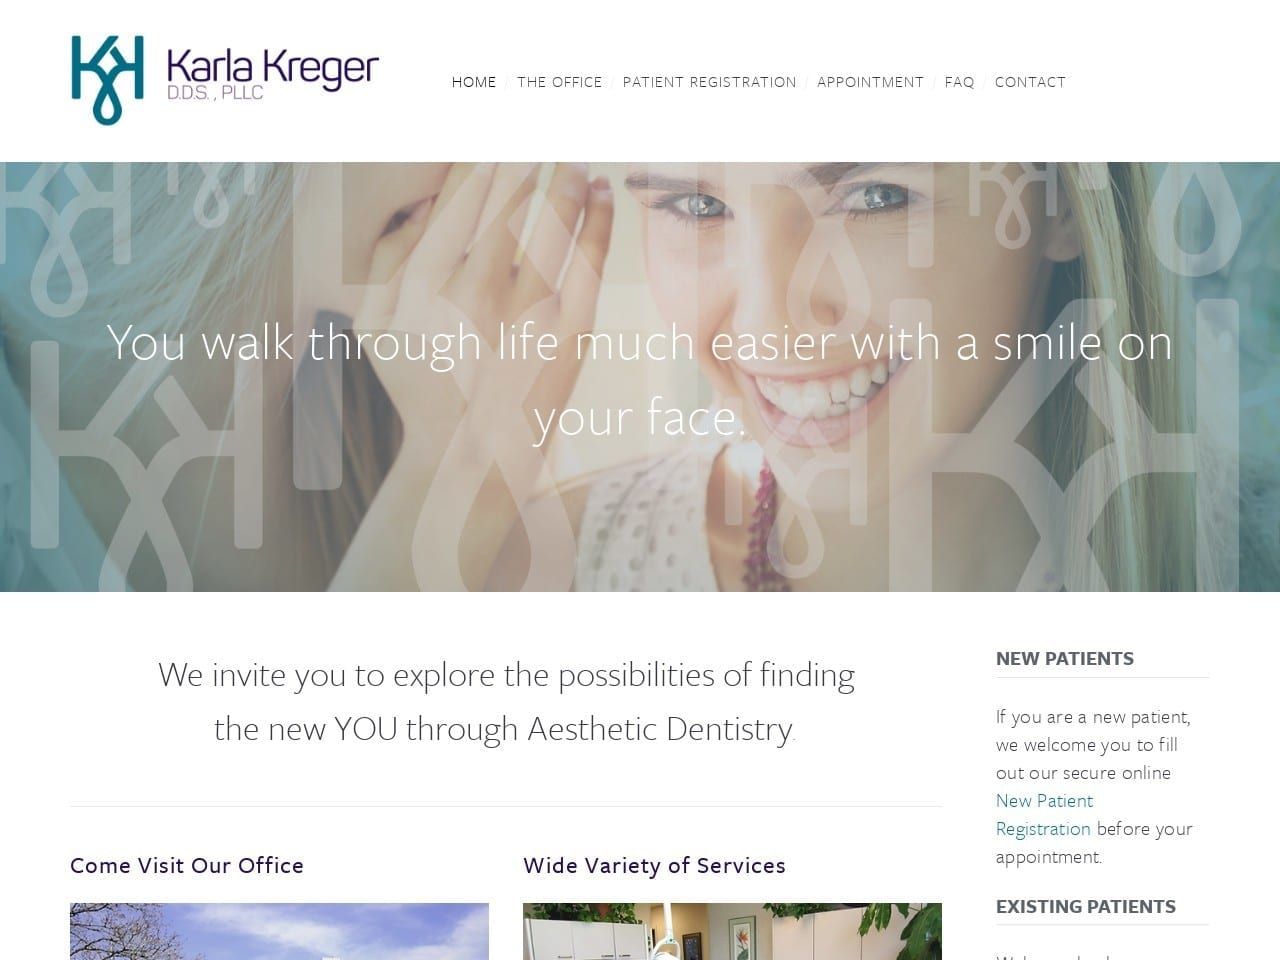 Karla M Kreger PLLC Website Screenshot from karlakreger.com